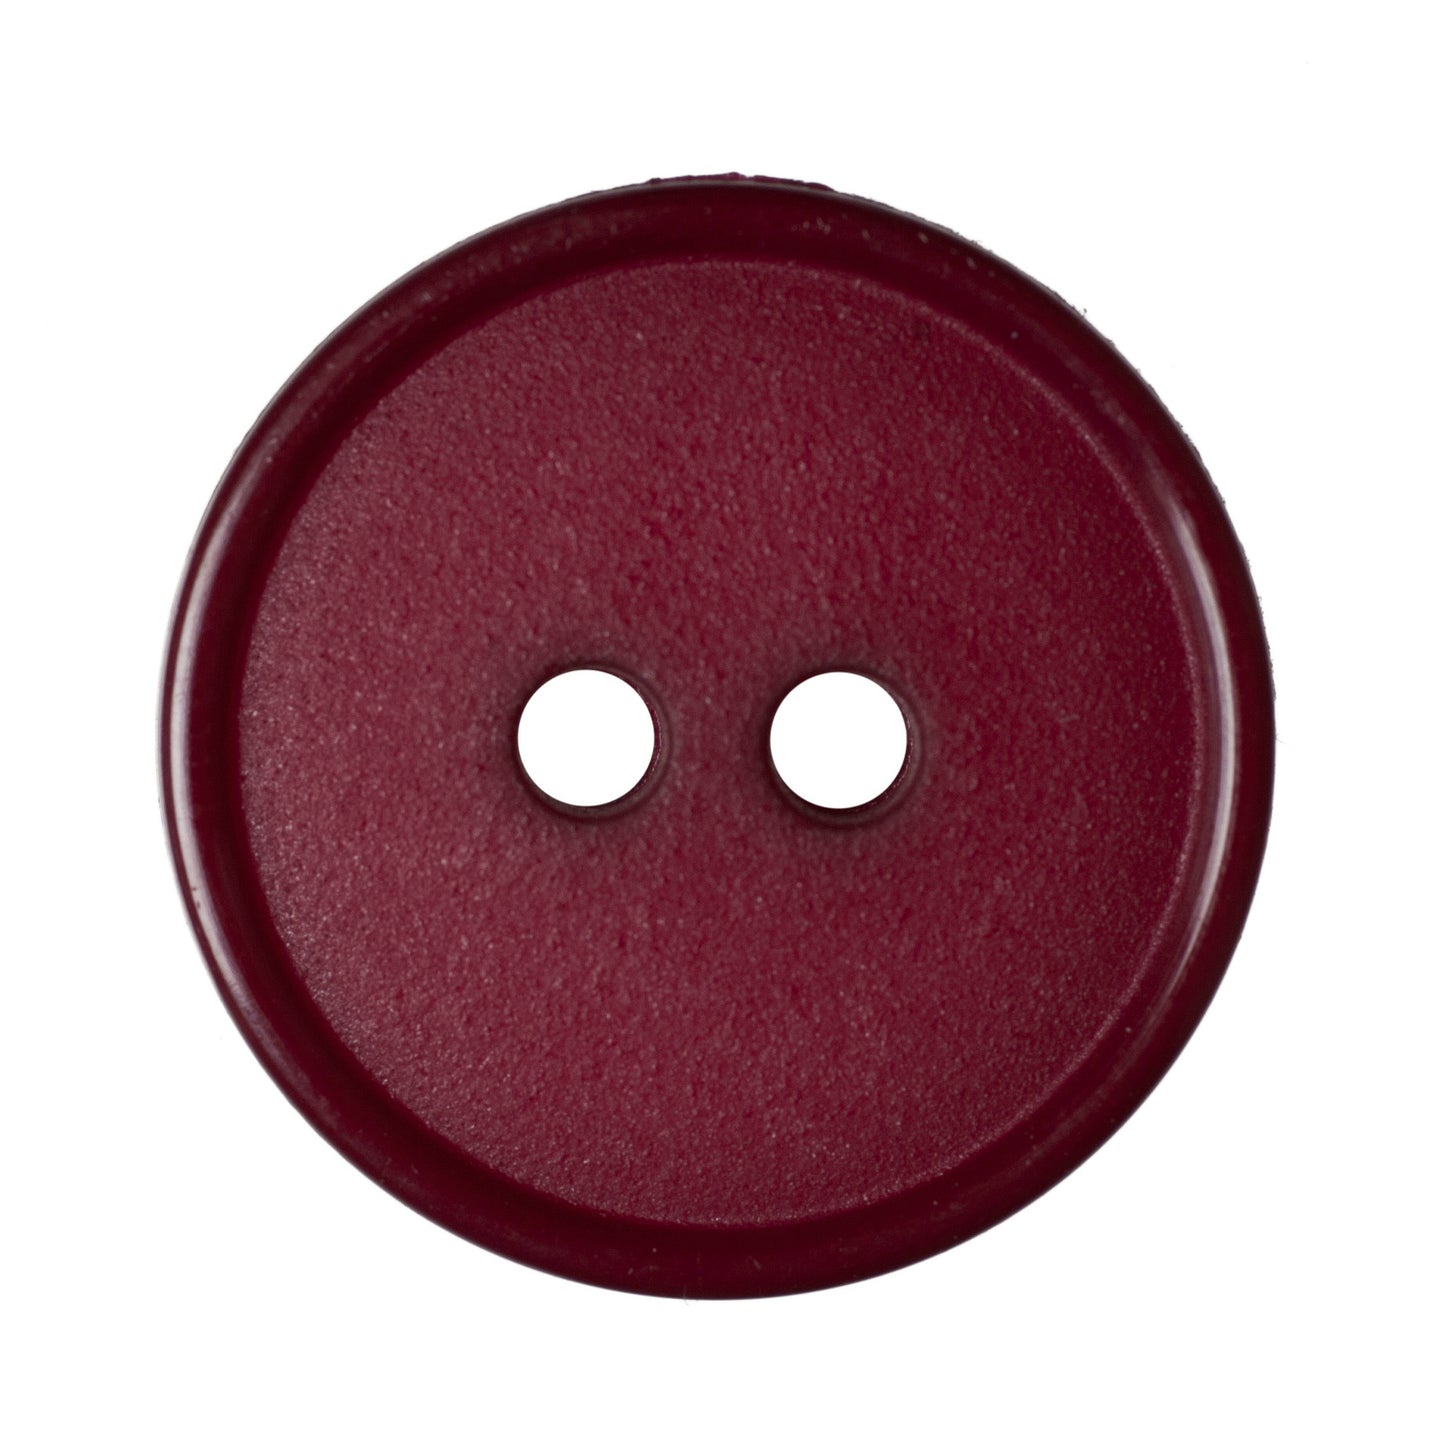 Narrow Rim 2 Hole Button Shiny/Matt - 18mm - Burgundy